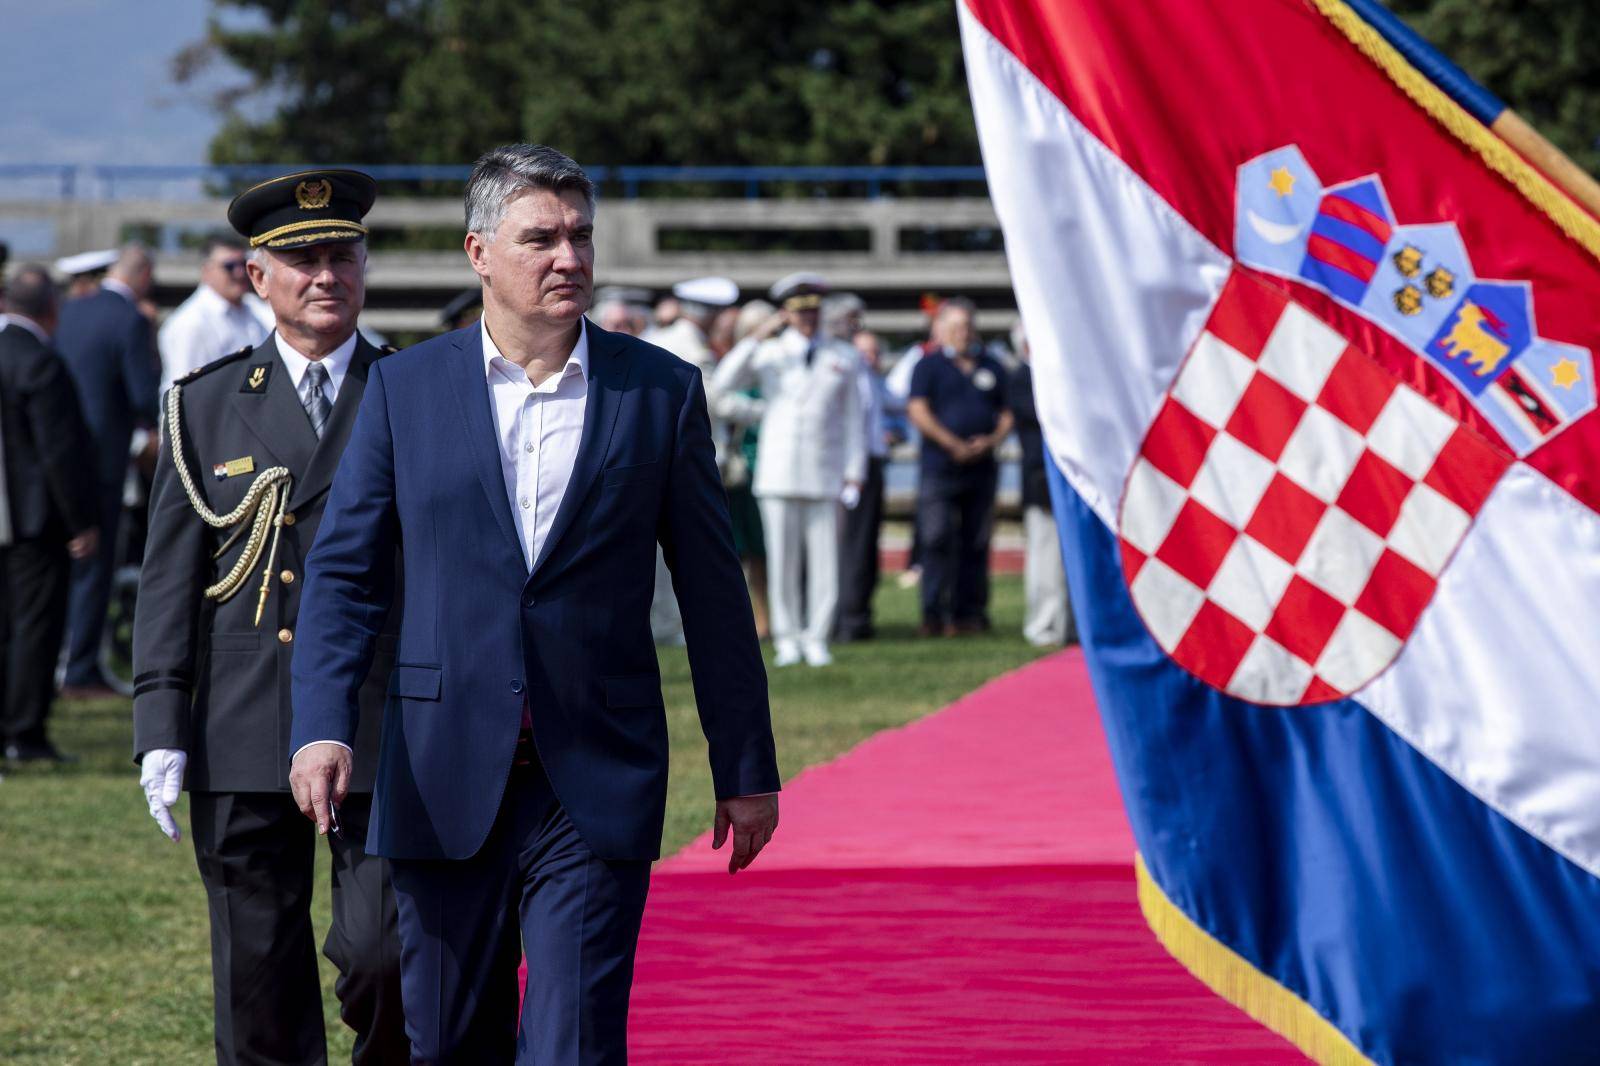 Split: Predsjednik Milanović sudjelovao na 30. obljetnici ustrojavanja HRM